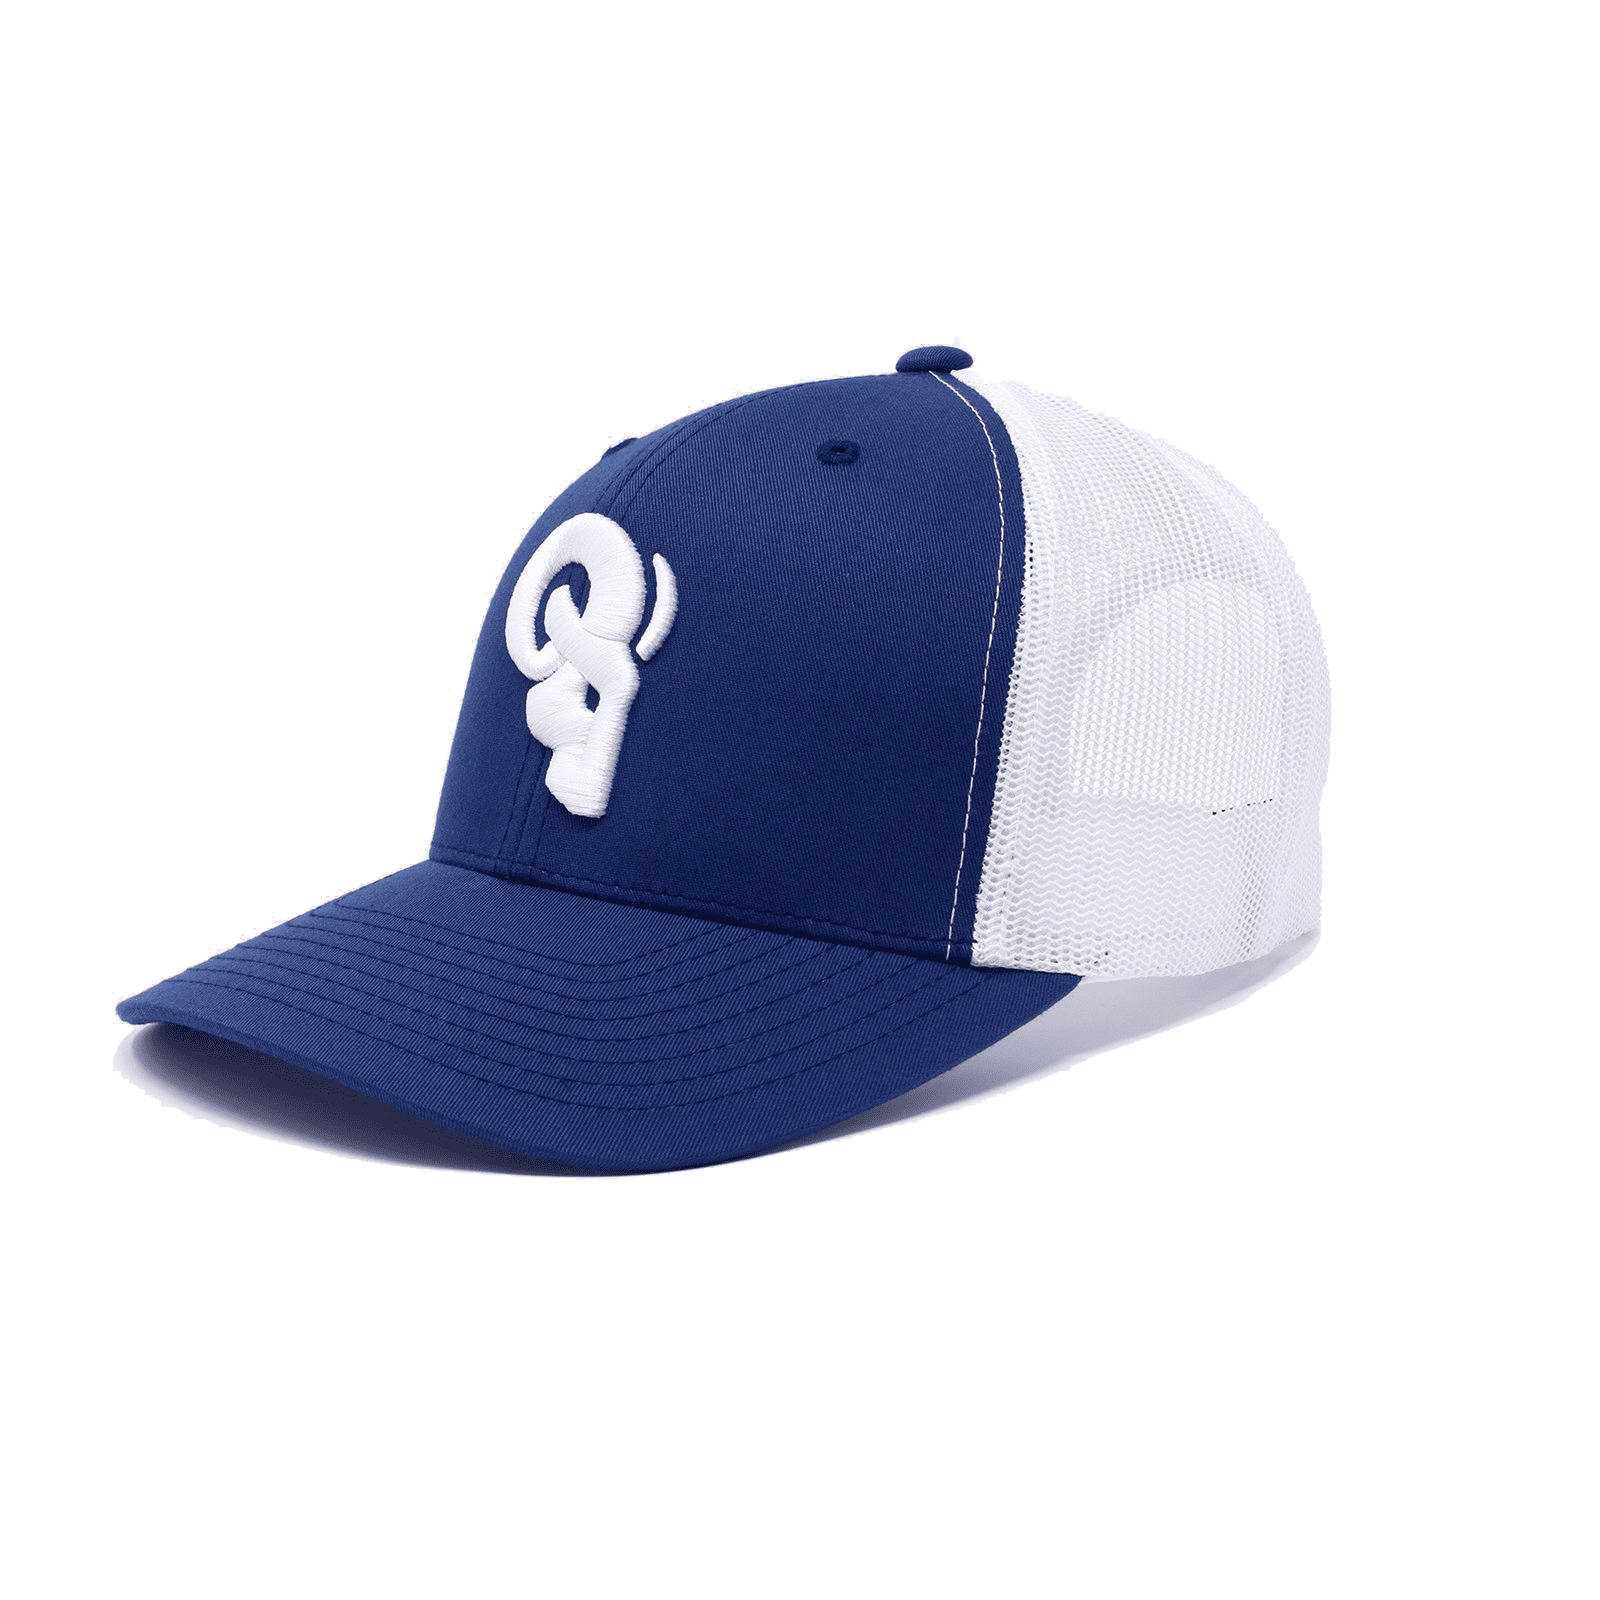 Mesh Two Tone Snapback Cap Premium Quality Durable Comfortable Fit RAM ADVANTAGE Trucker Hat